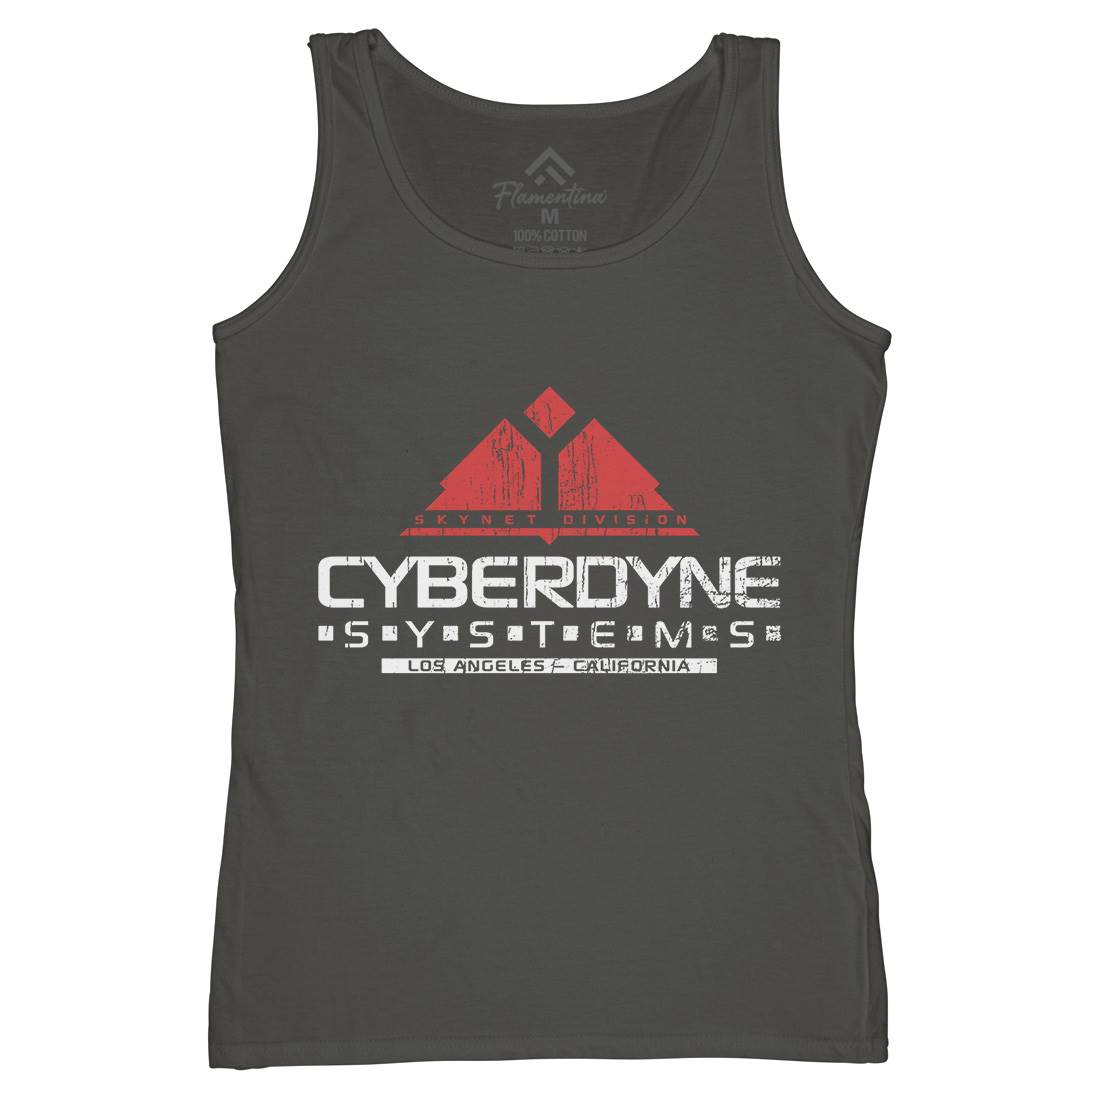 Cyberdyne Systems Womens Organic Tank Top Vest Space D122